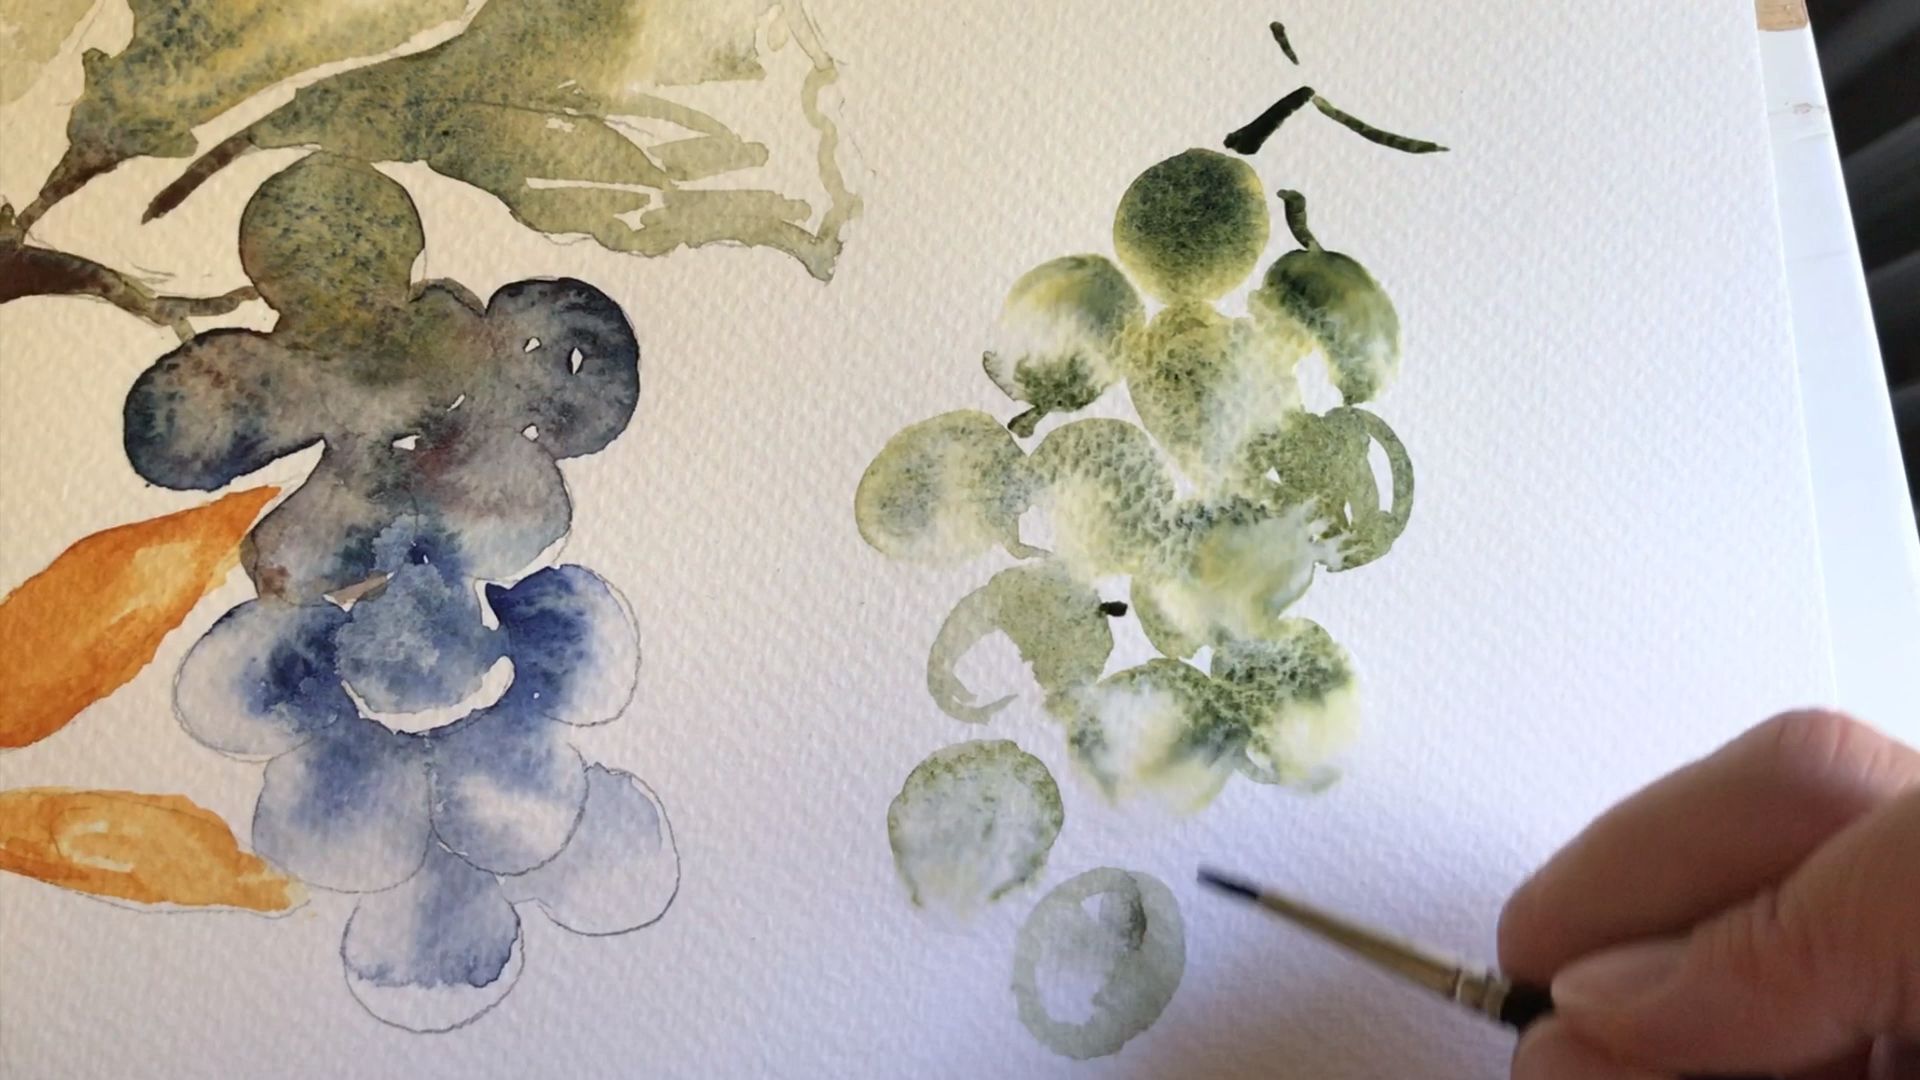 Watercolour grapes - Watercolour grapes -   17 beauty Day illustration ideas